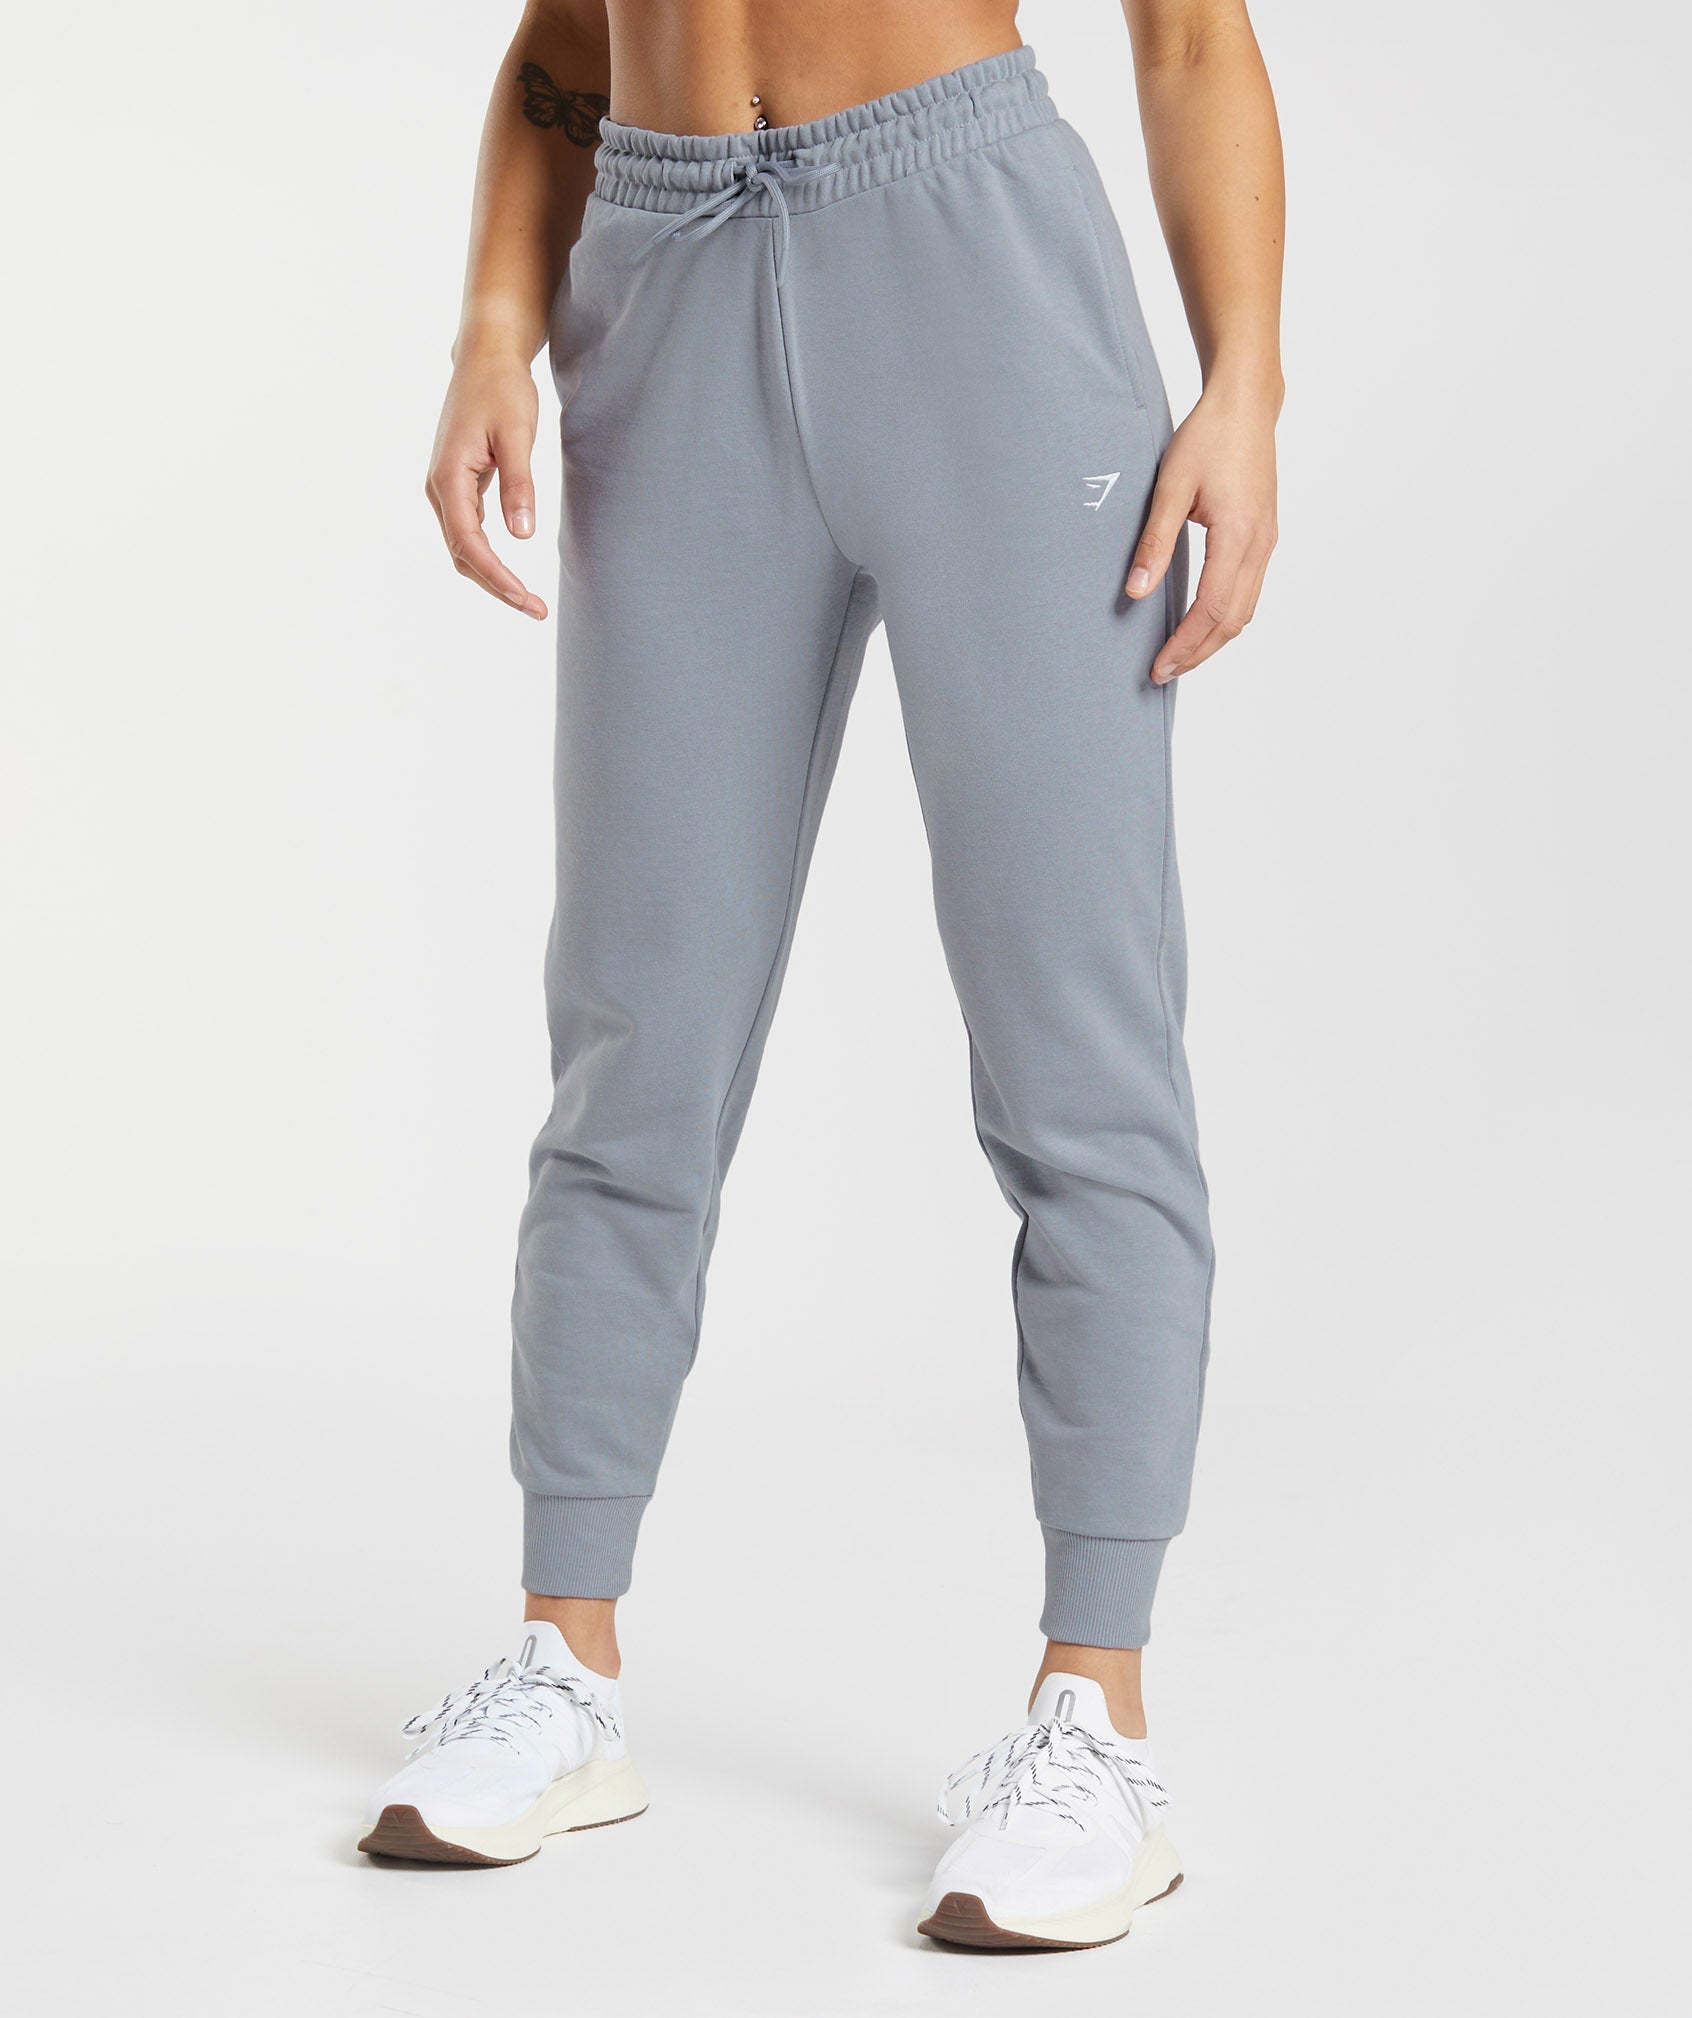 Gymshark Women's Medium Gray Knit Jogger Pants